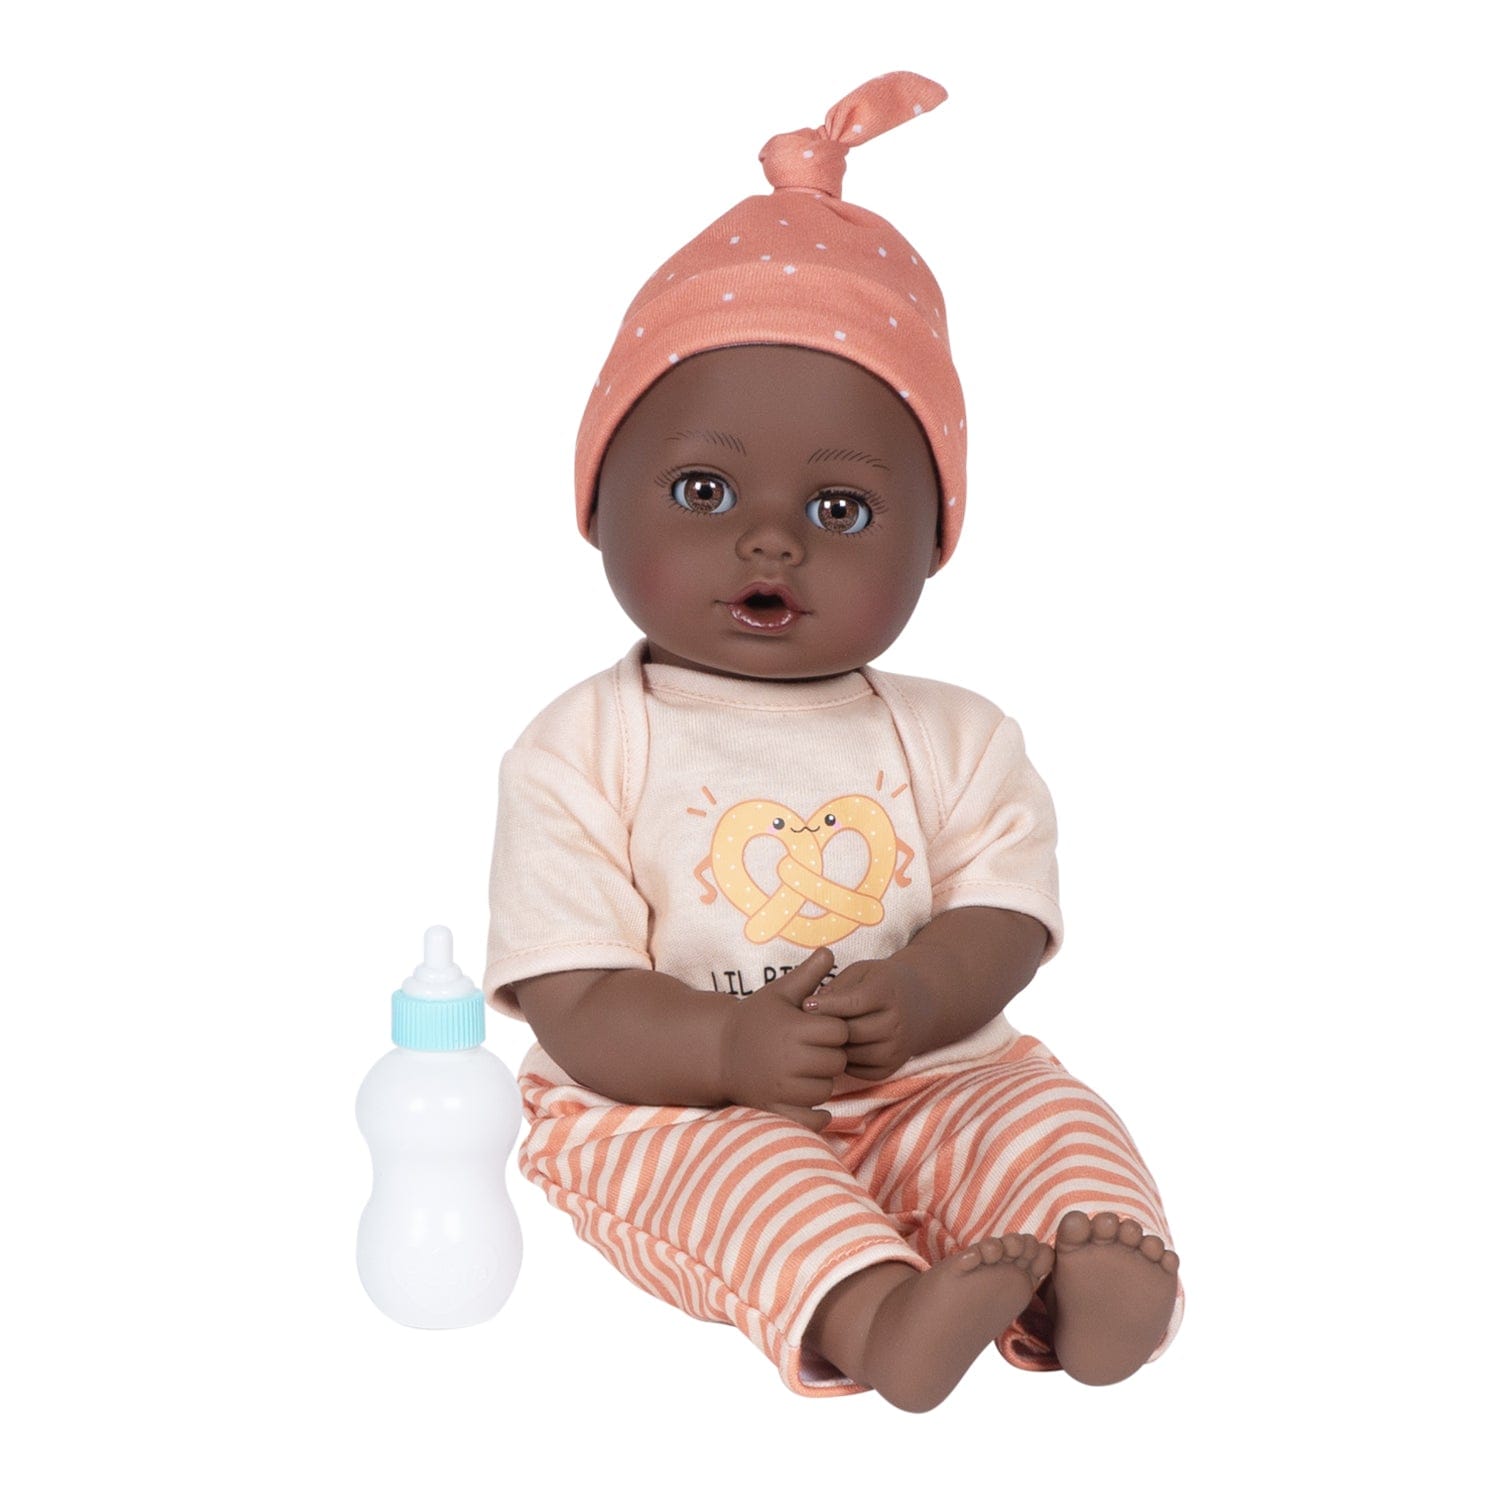 Adora PlayTime Baby Doll - Sweet Pretzel, Doll Clothes & Accessories Set